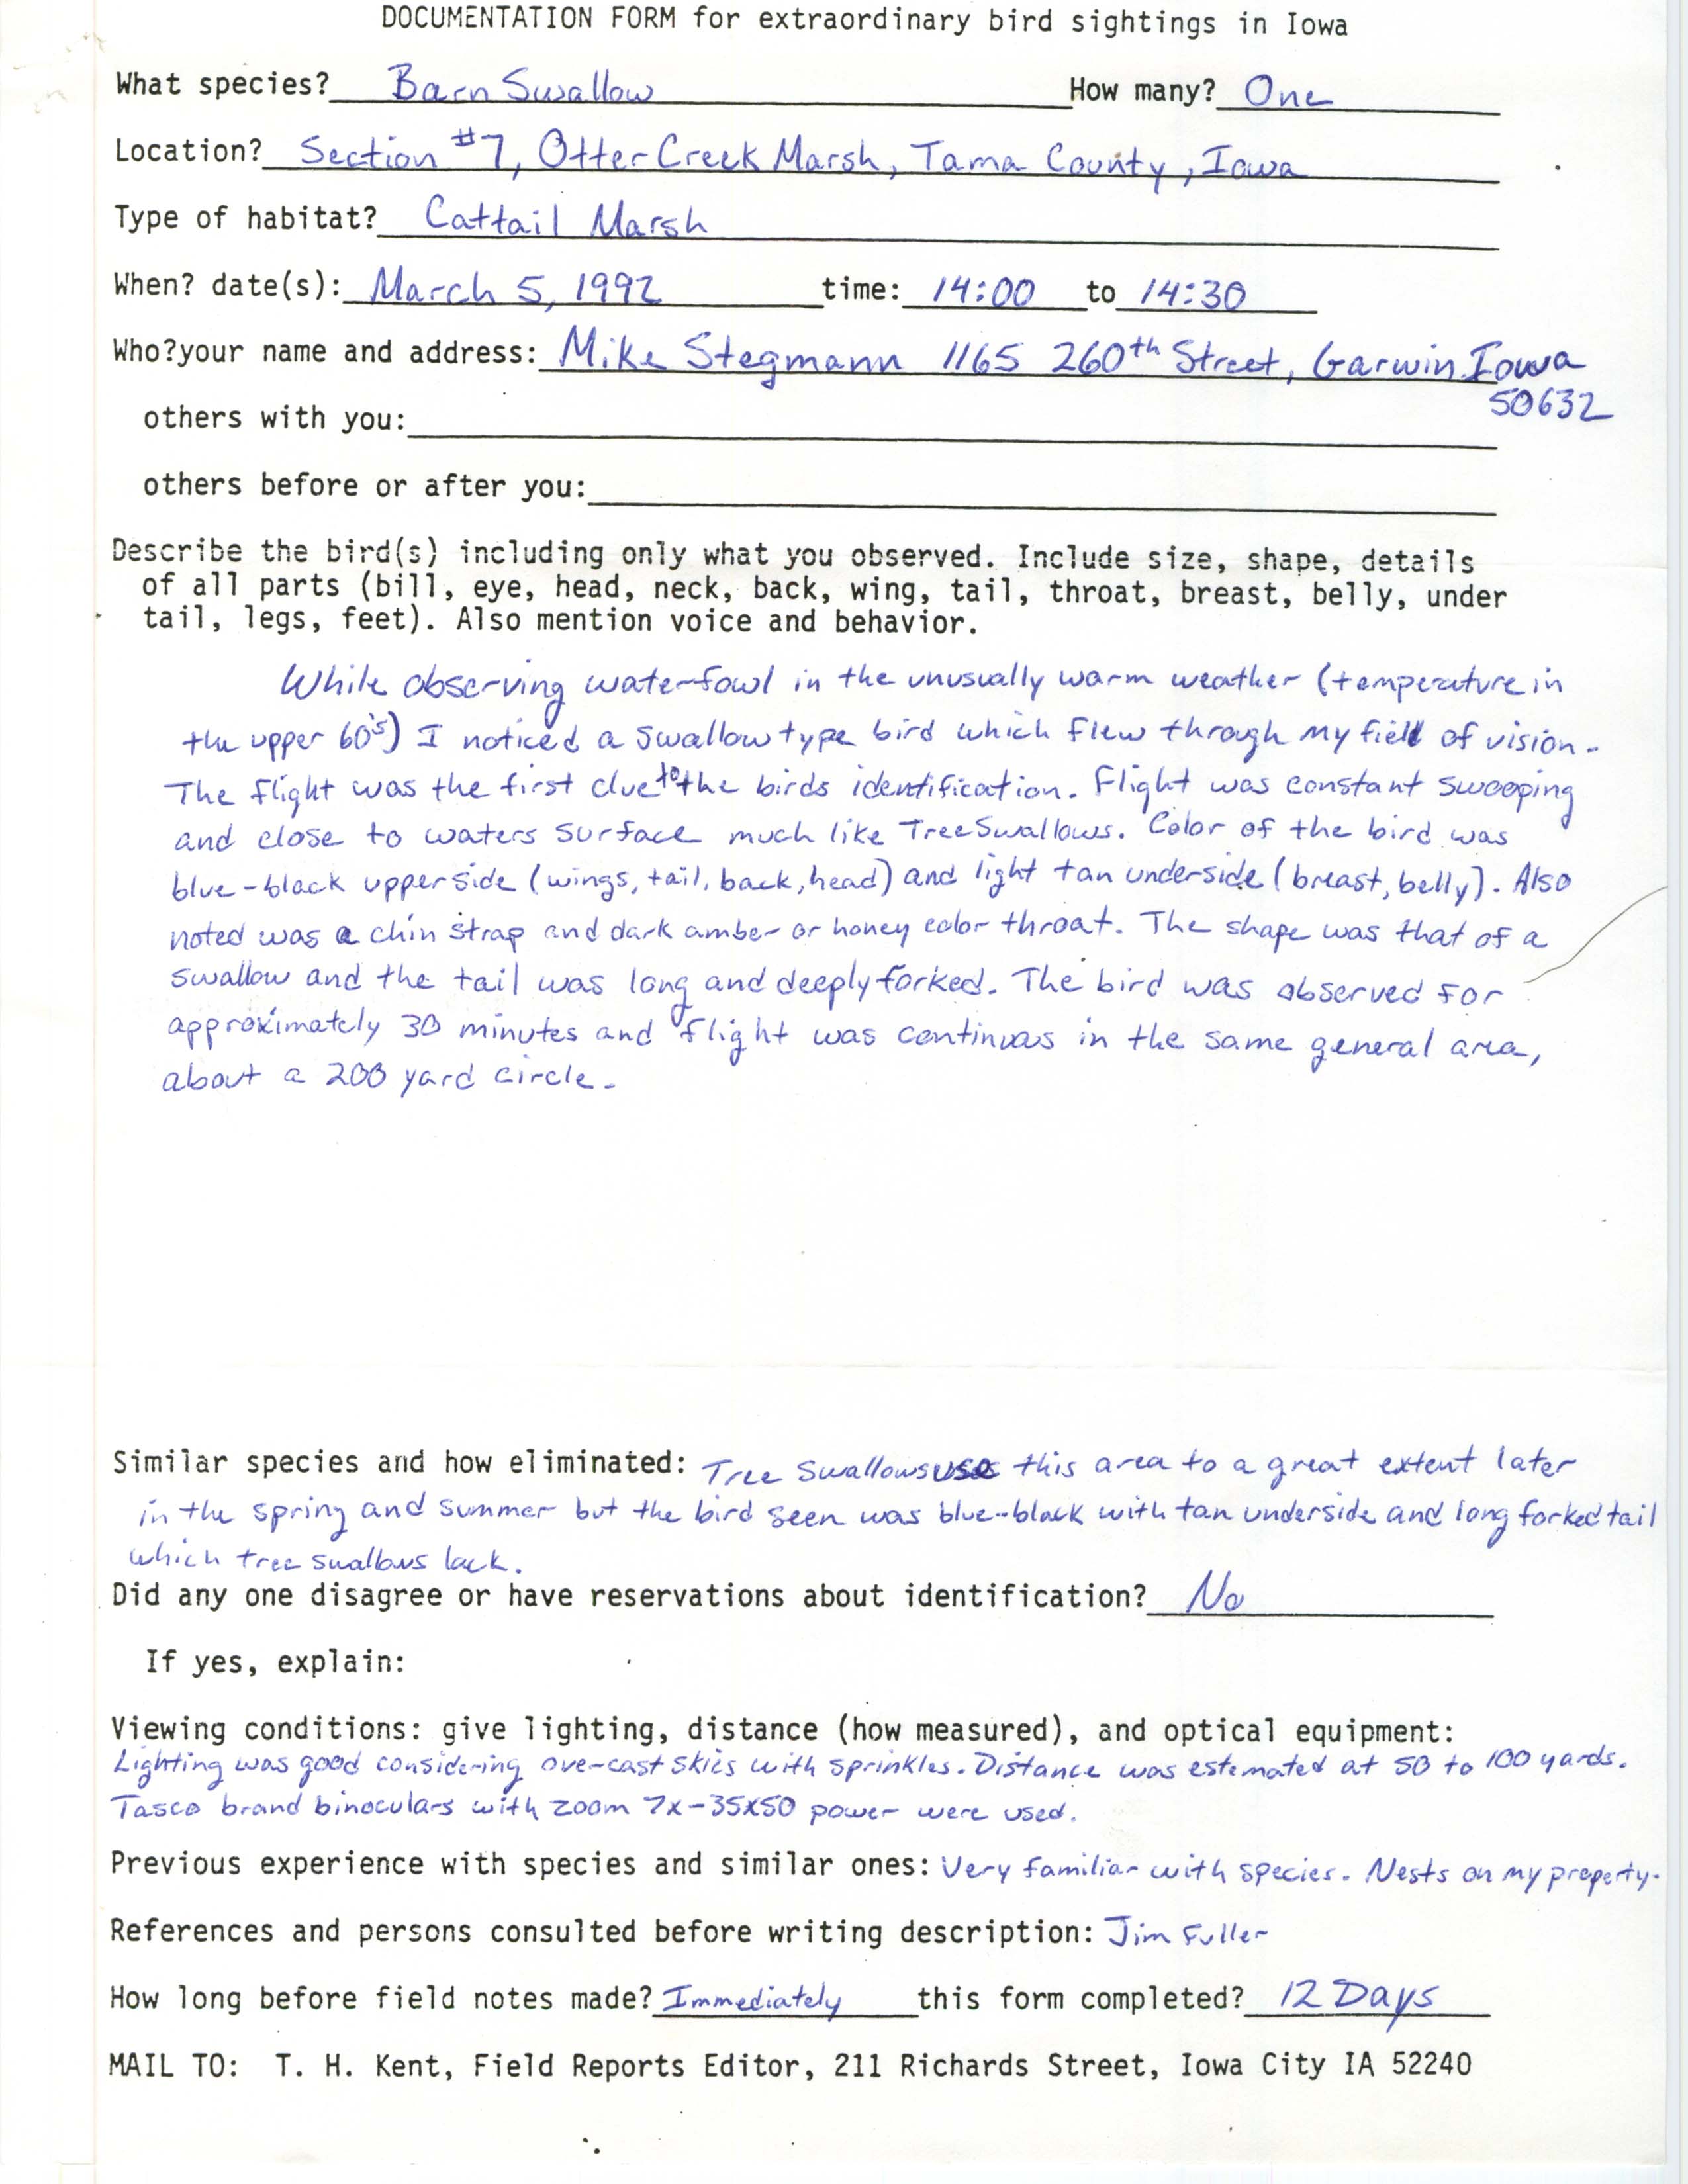 Rare bird documentation form for Barn Swallow at Otter Creek Marsh, 1992